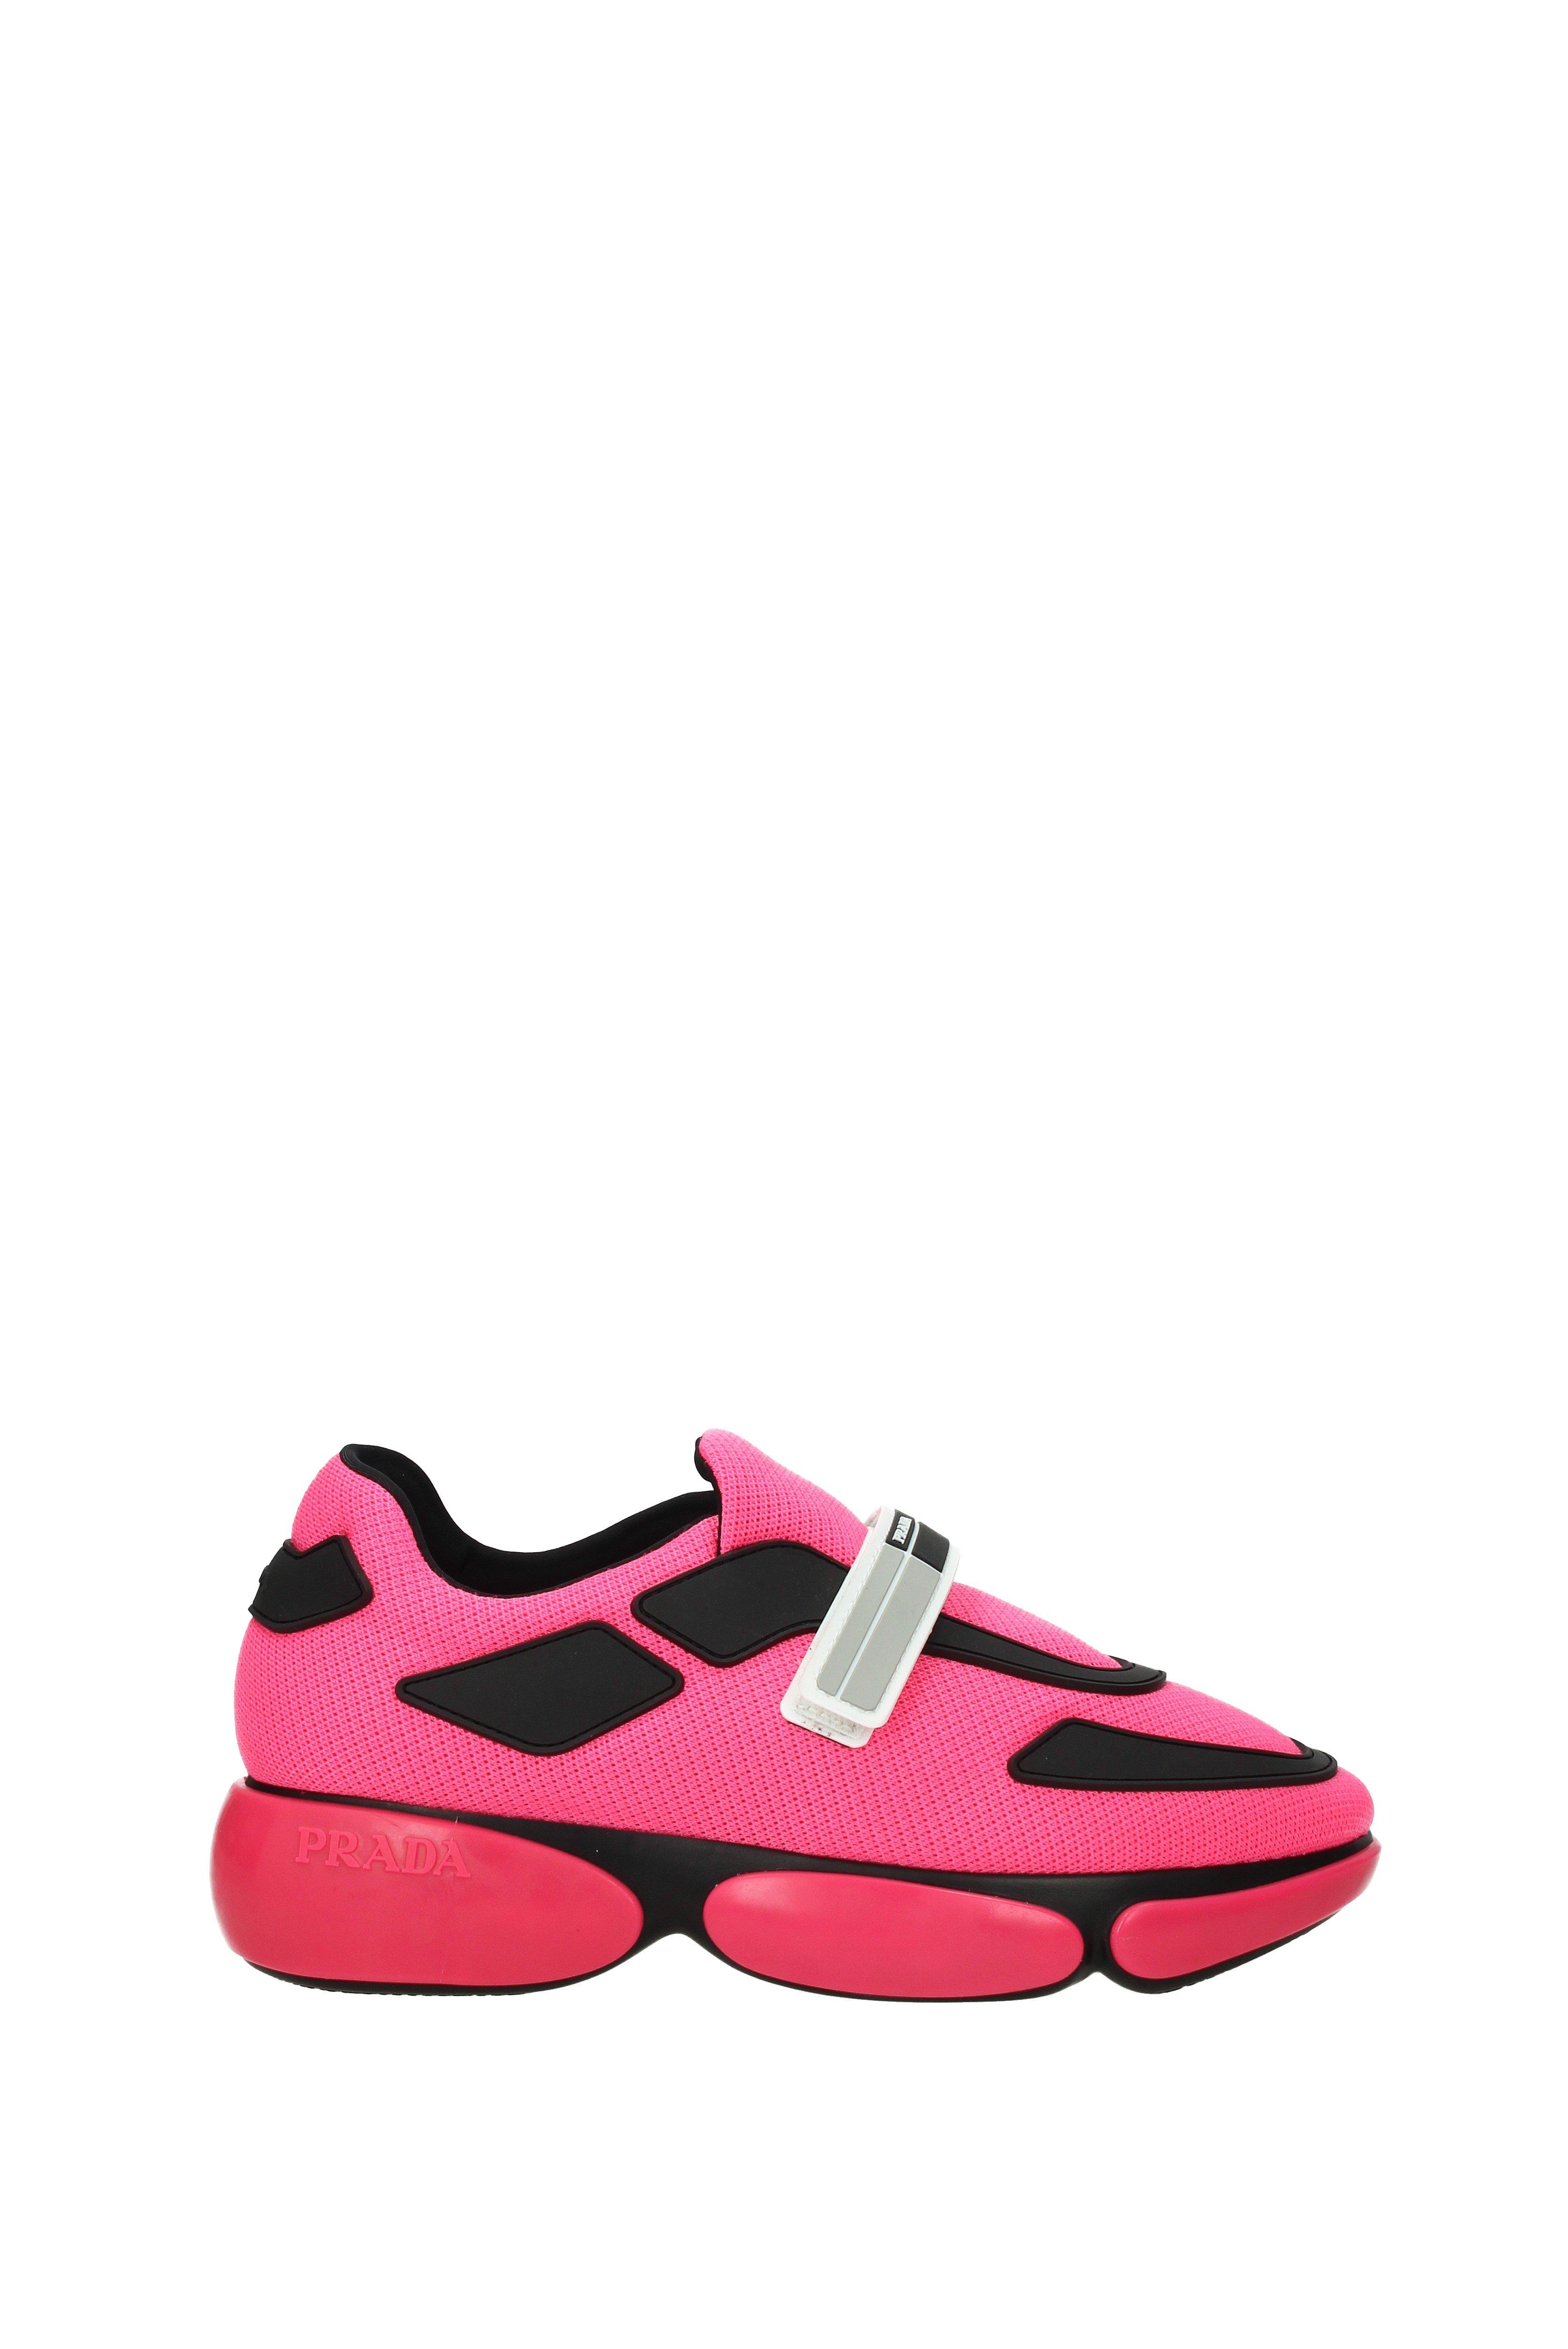 Prada Sneakers Women Pink - Save 64% - Lyst